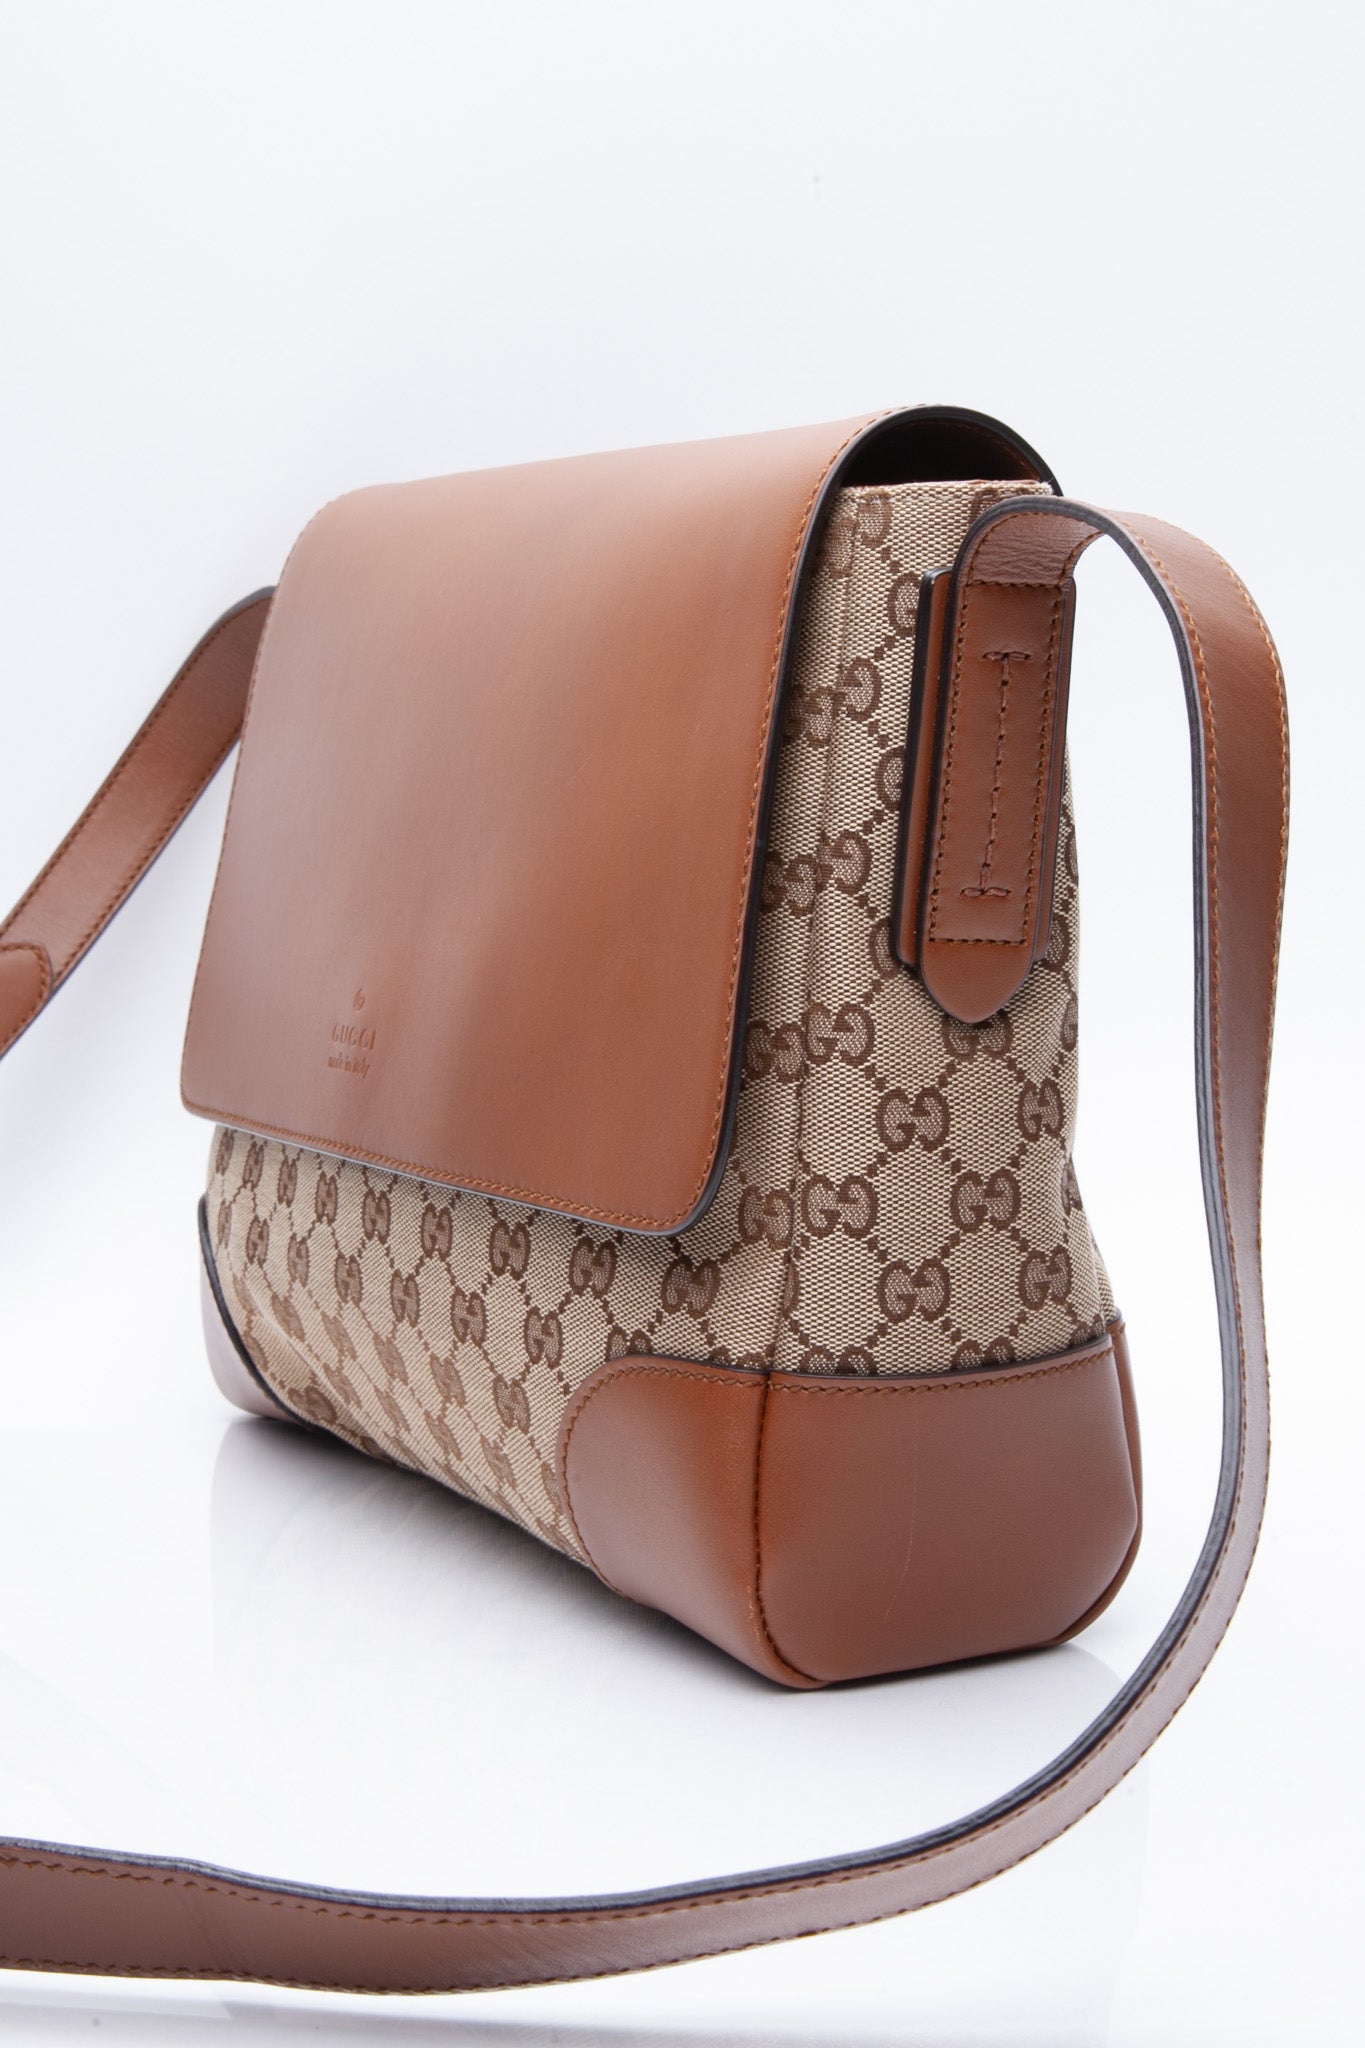 Gucci Canvas Gray Cross Body Messenger Bag Sling Bag 272396